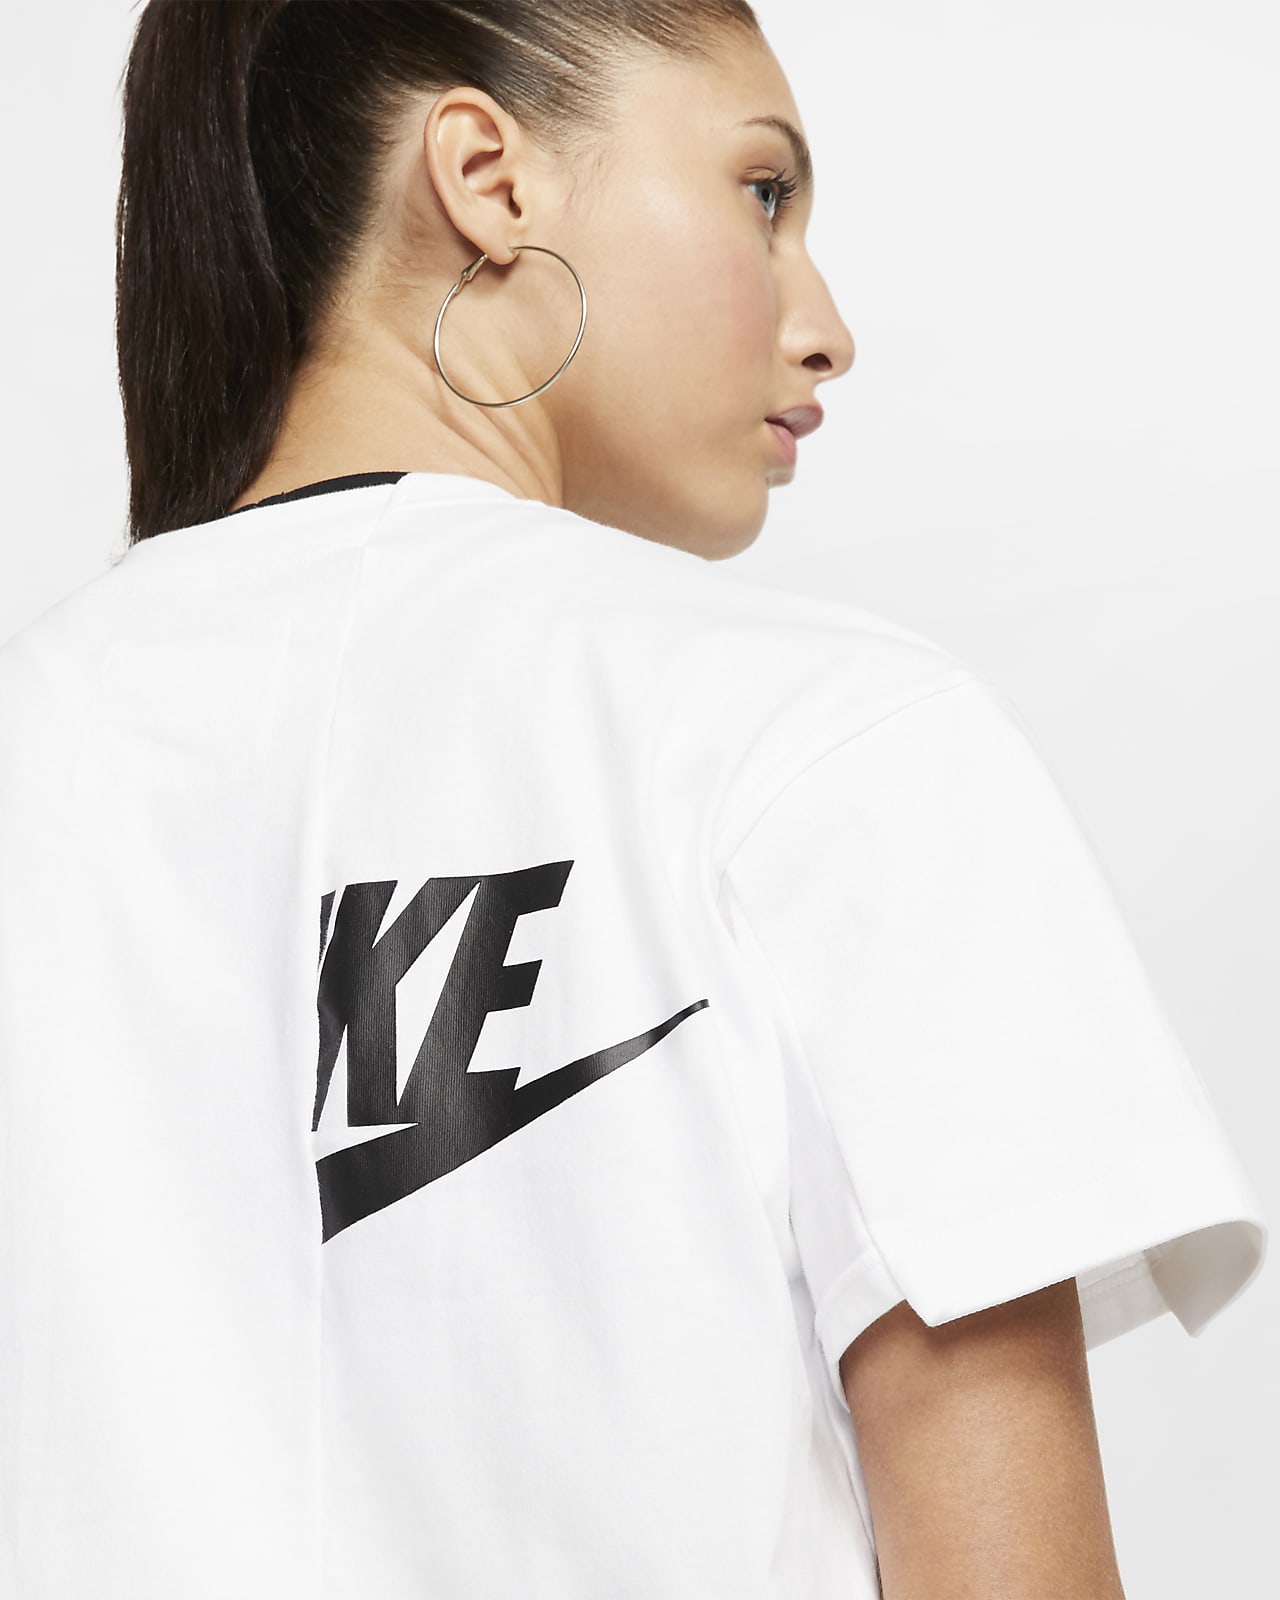 Nike x Sacai Women's Hybrid T-Shirt